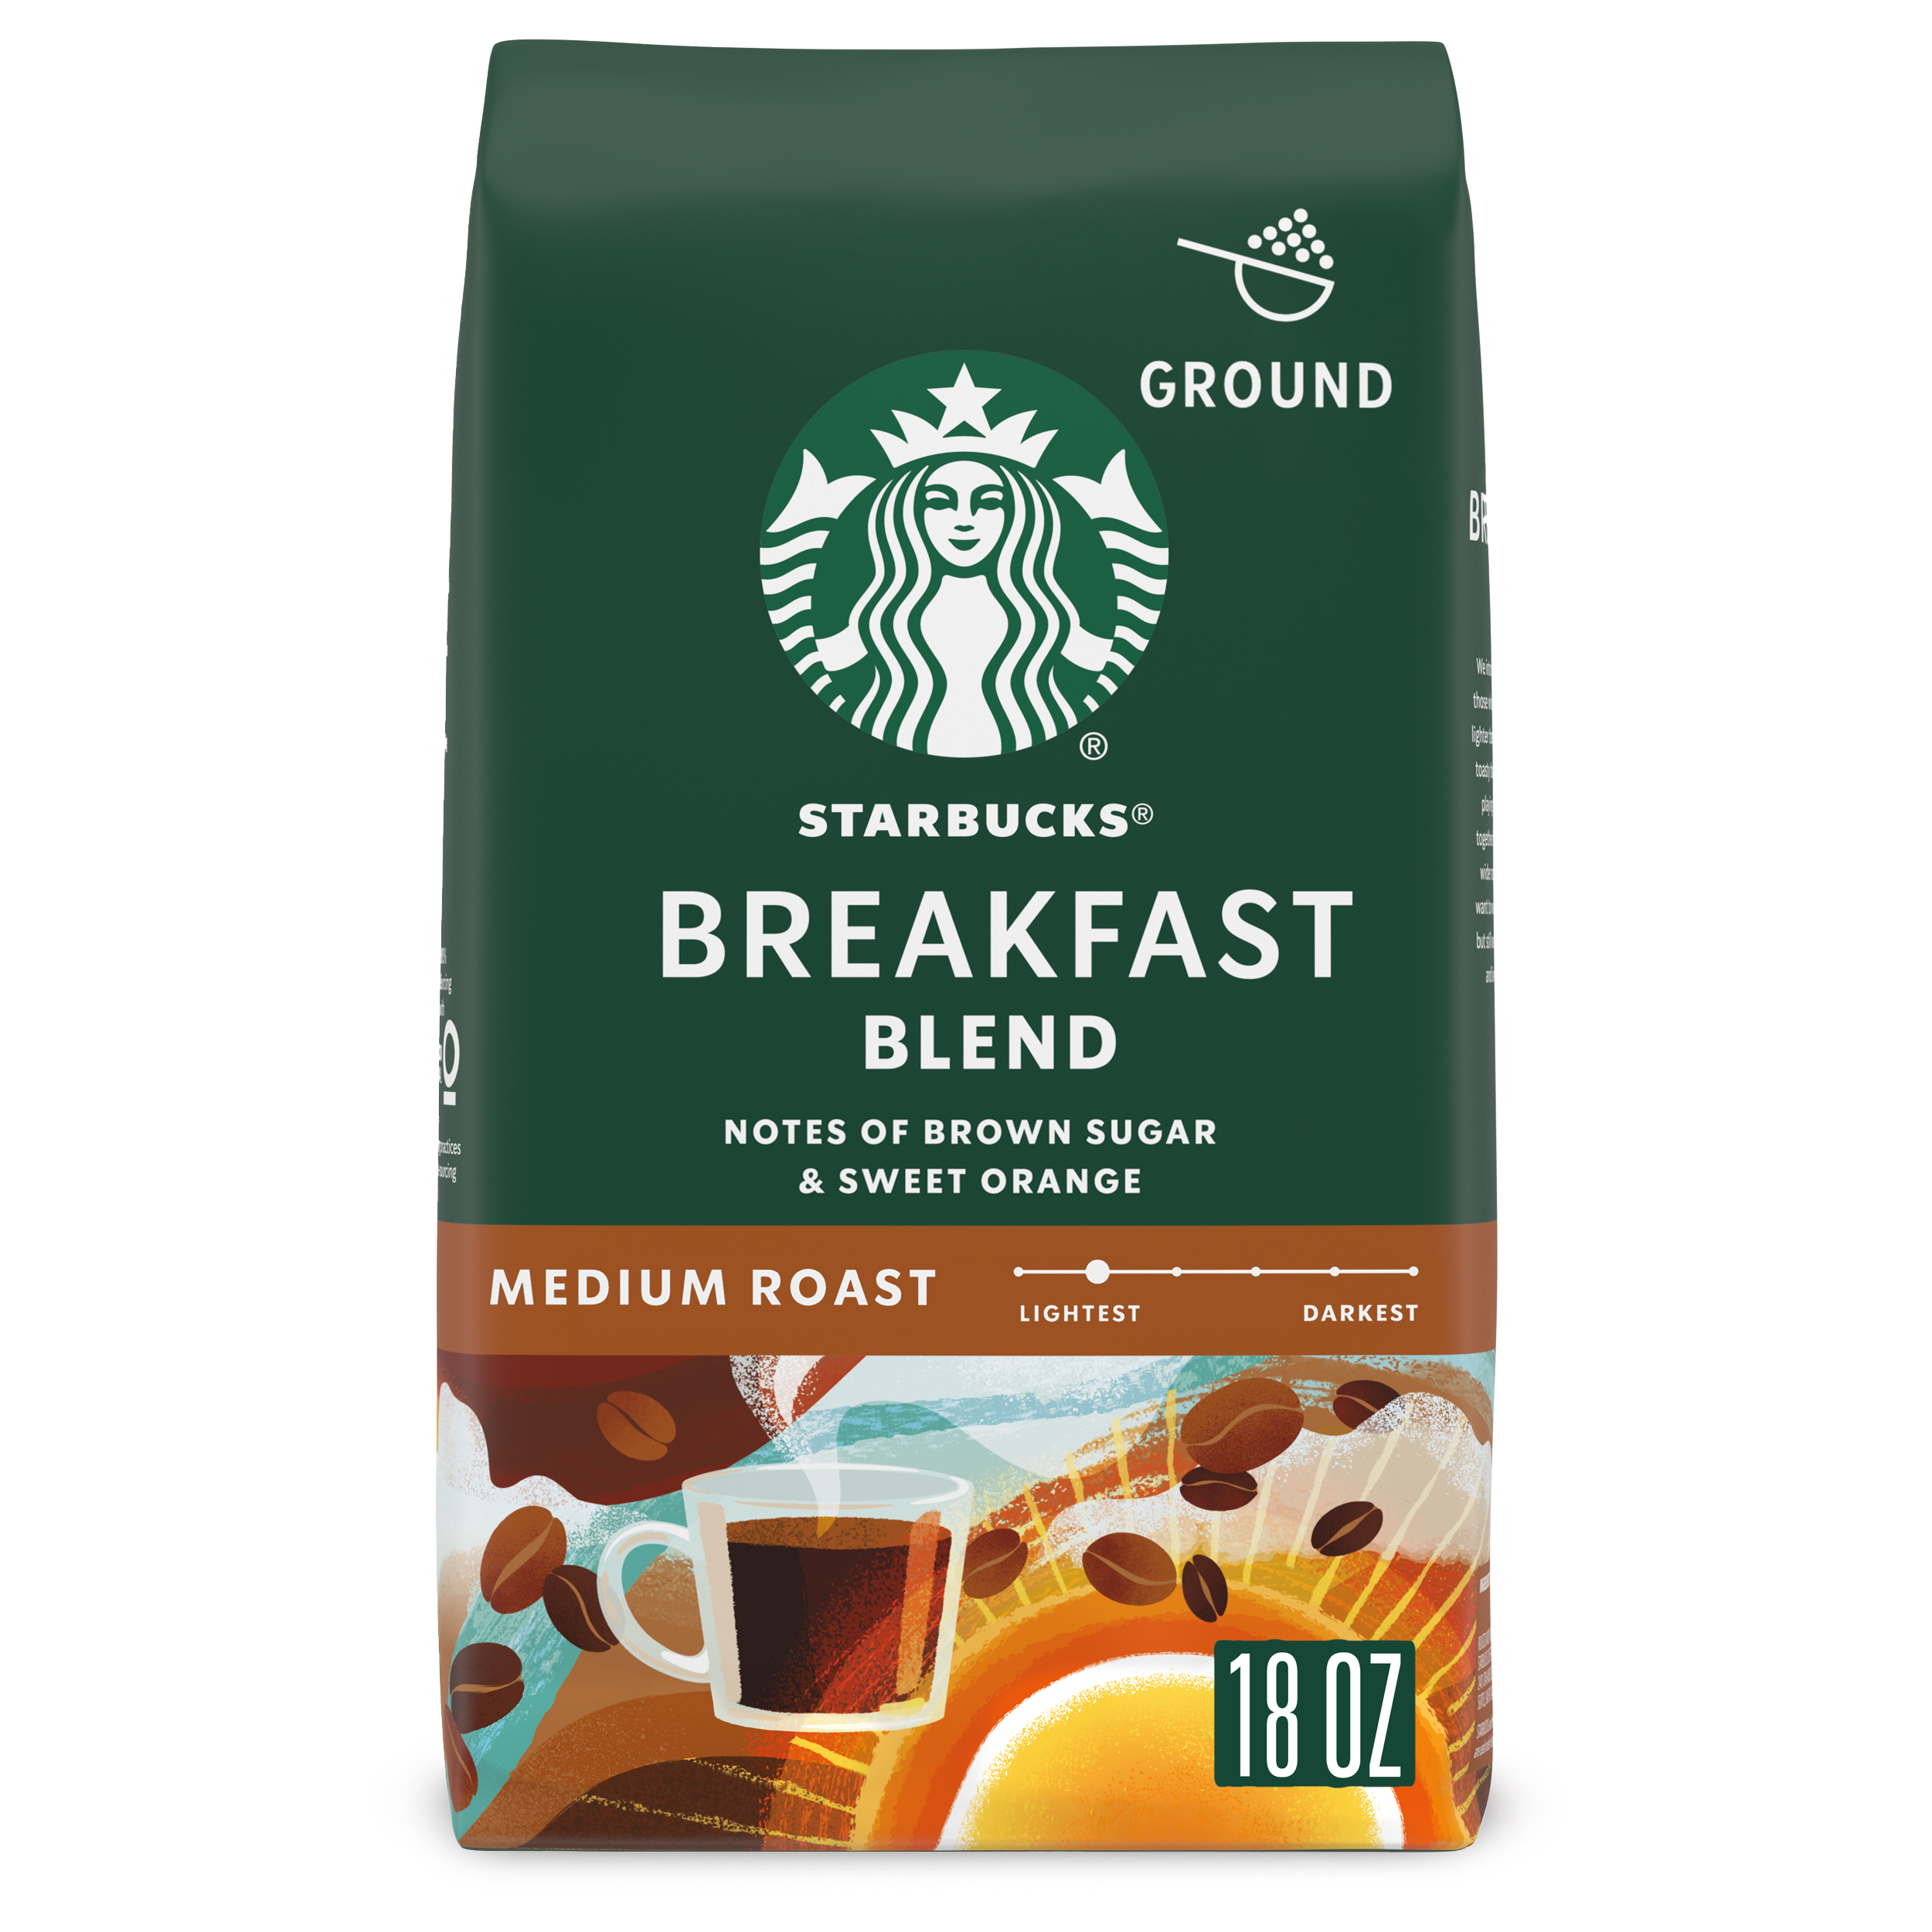 Starbucks Arabica Beans Breakfast Blend, Medium Roast, Ground Coffee, 18 oz - image 1 of 8